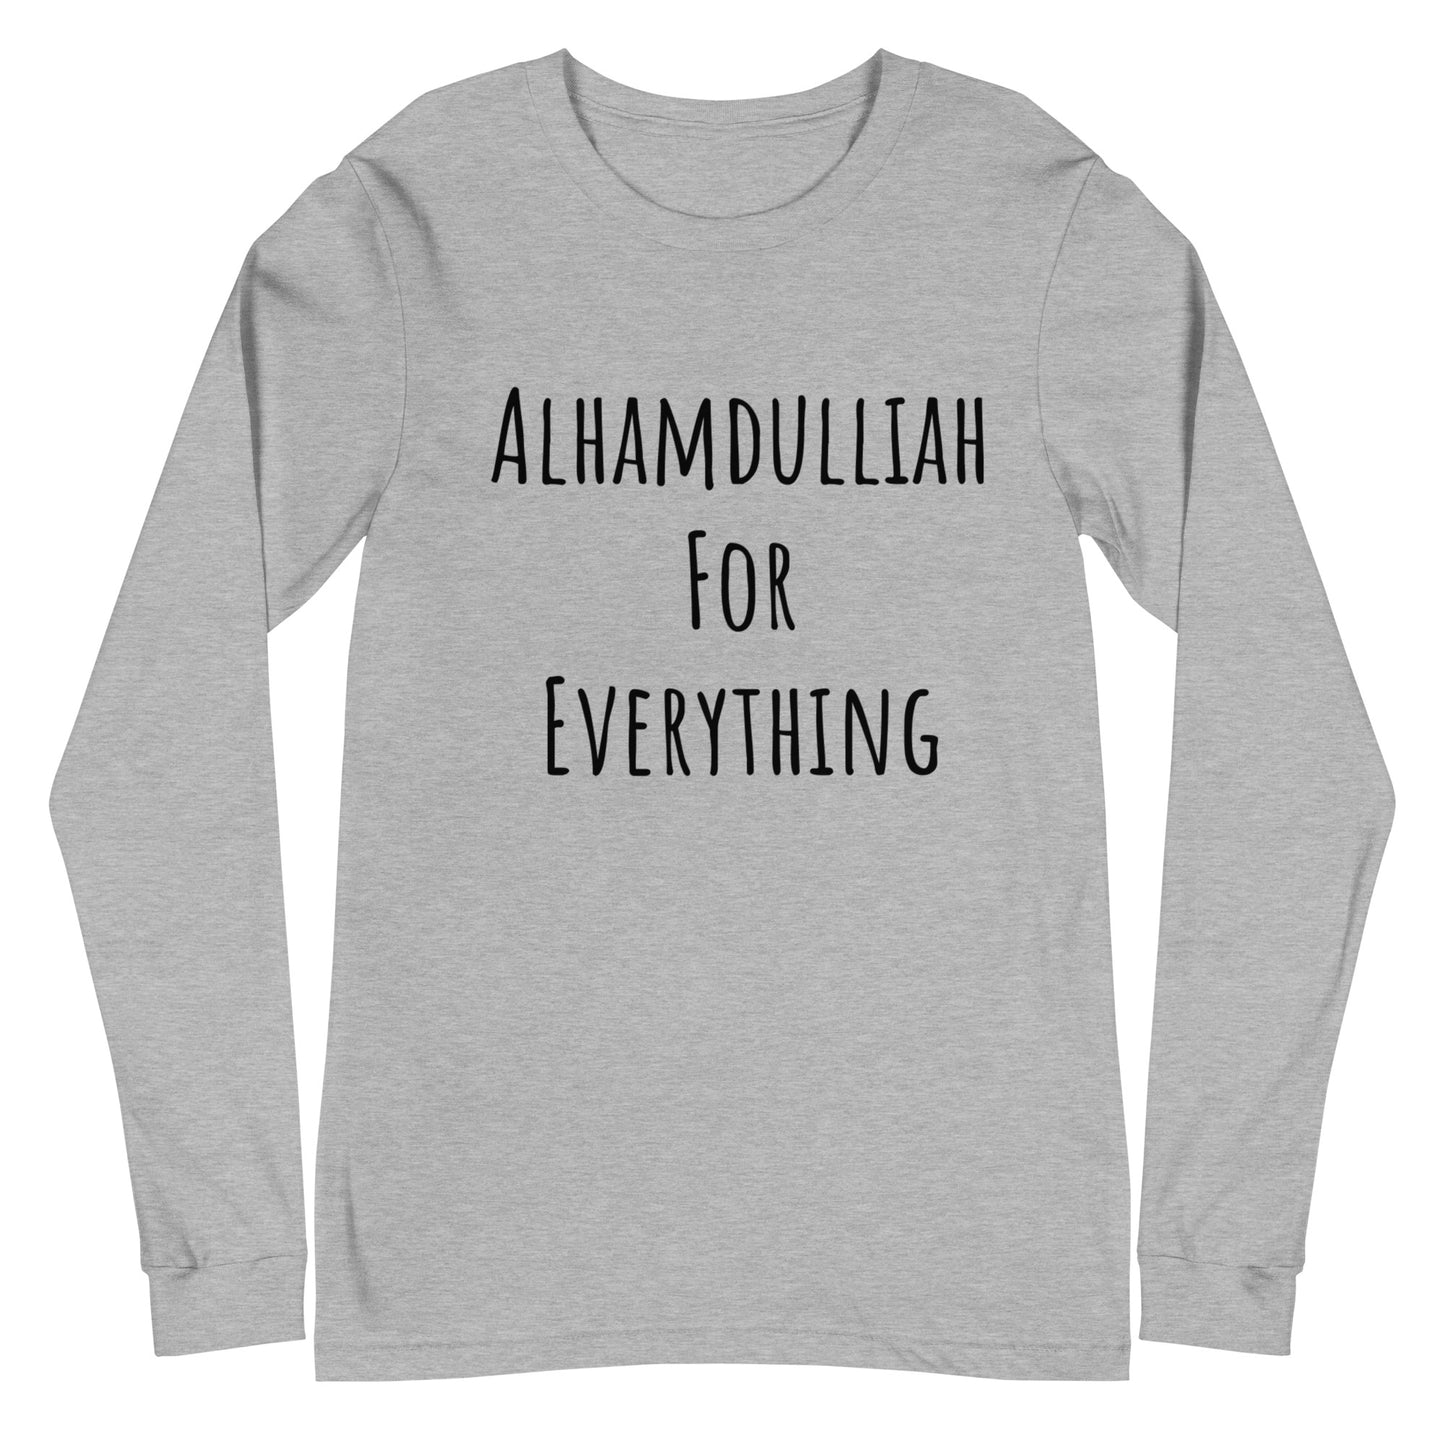 Alhamdulliah for everything Unisex Long Sleeve Tee